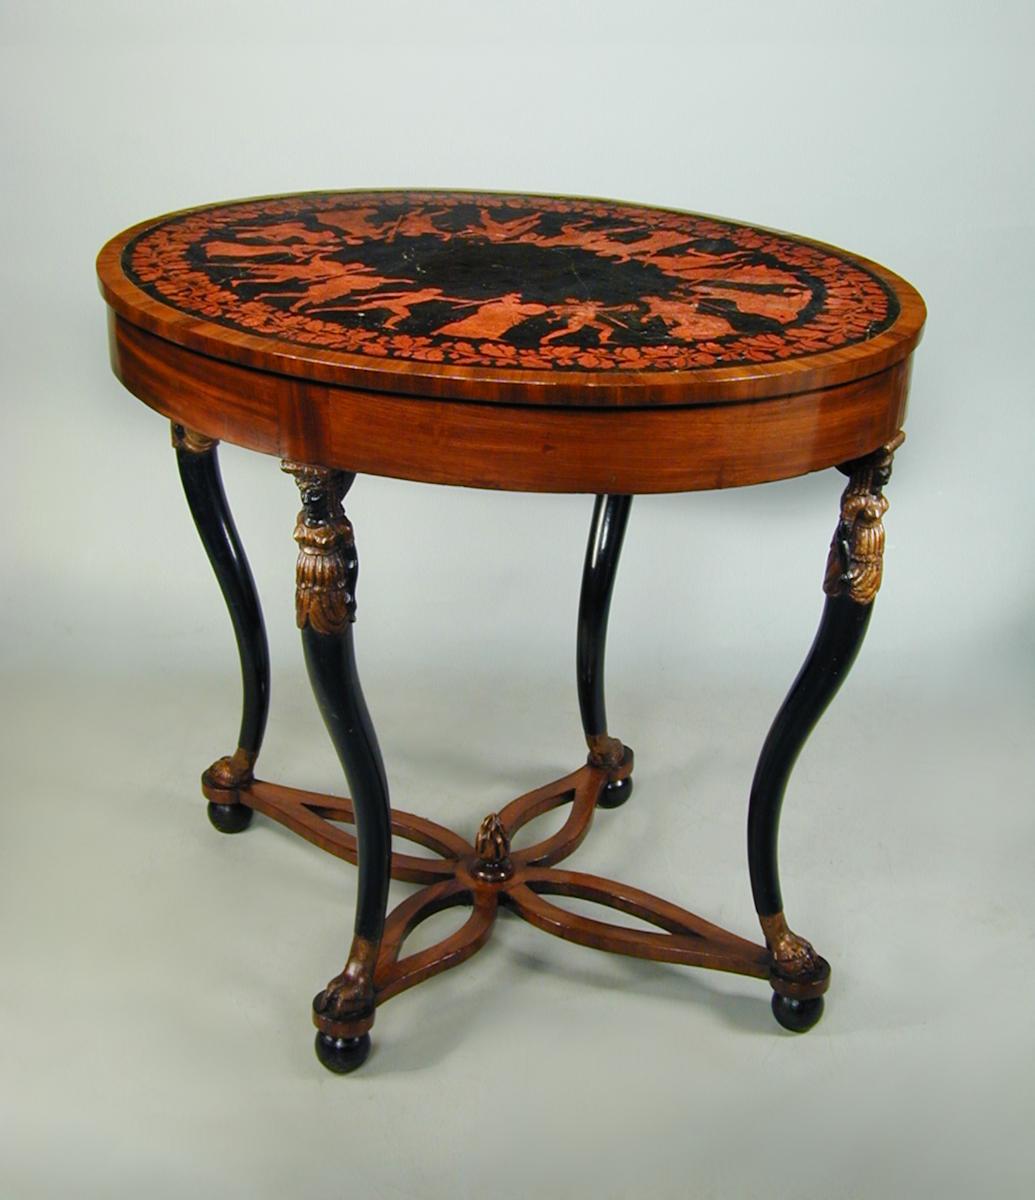 An unusual Italian neo-classical oval mahogany centre table